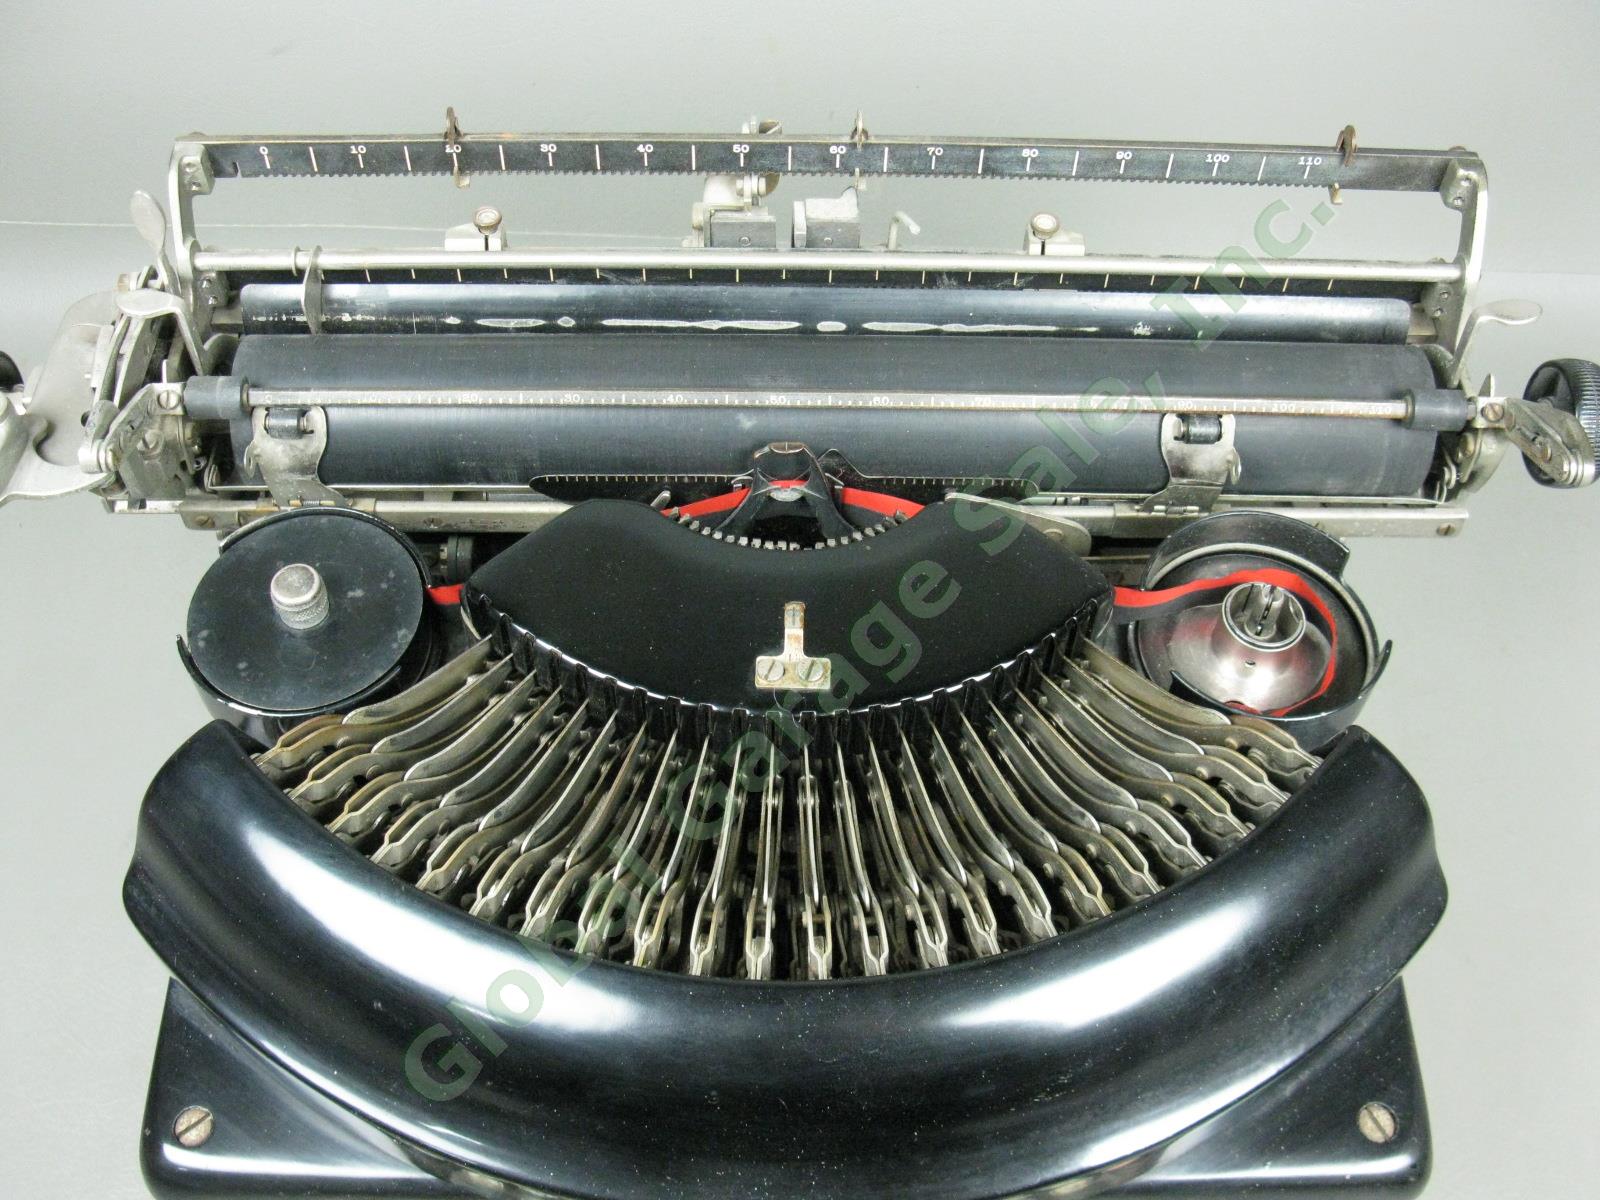 Vtg Antique 1929 Remington Noiseless 6 Manual Typewriter Serial X117909 Cleaned 2